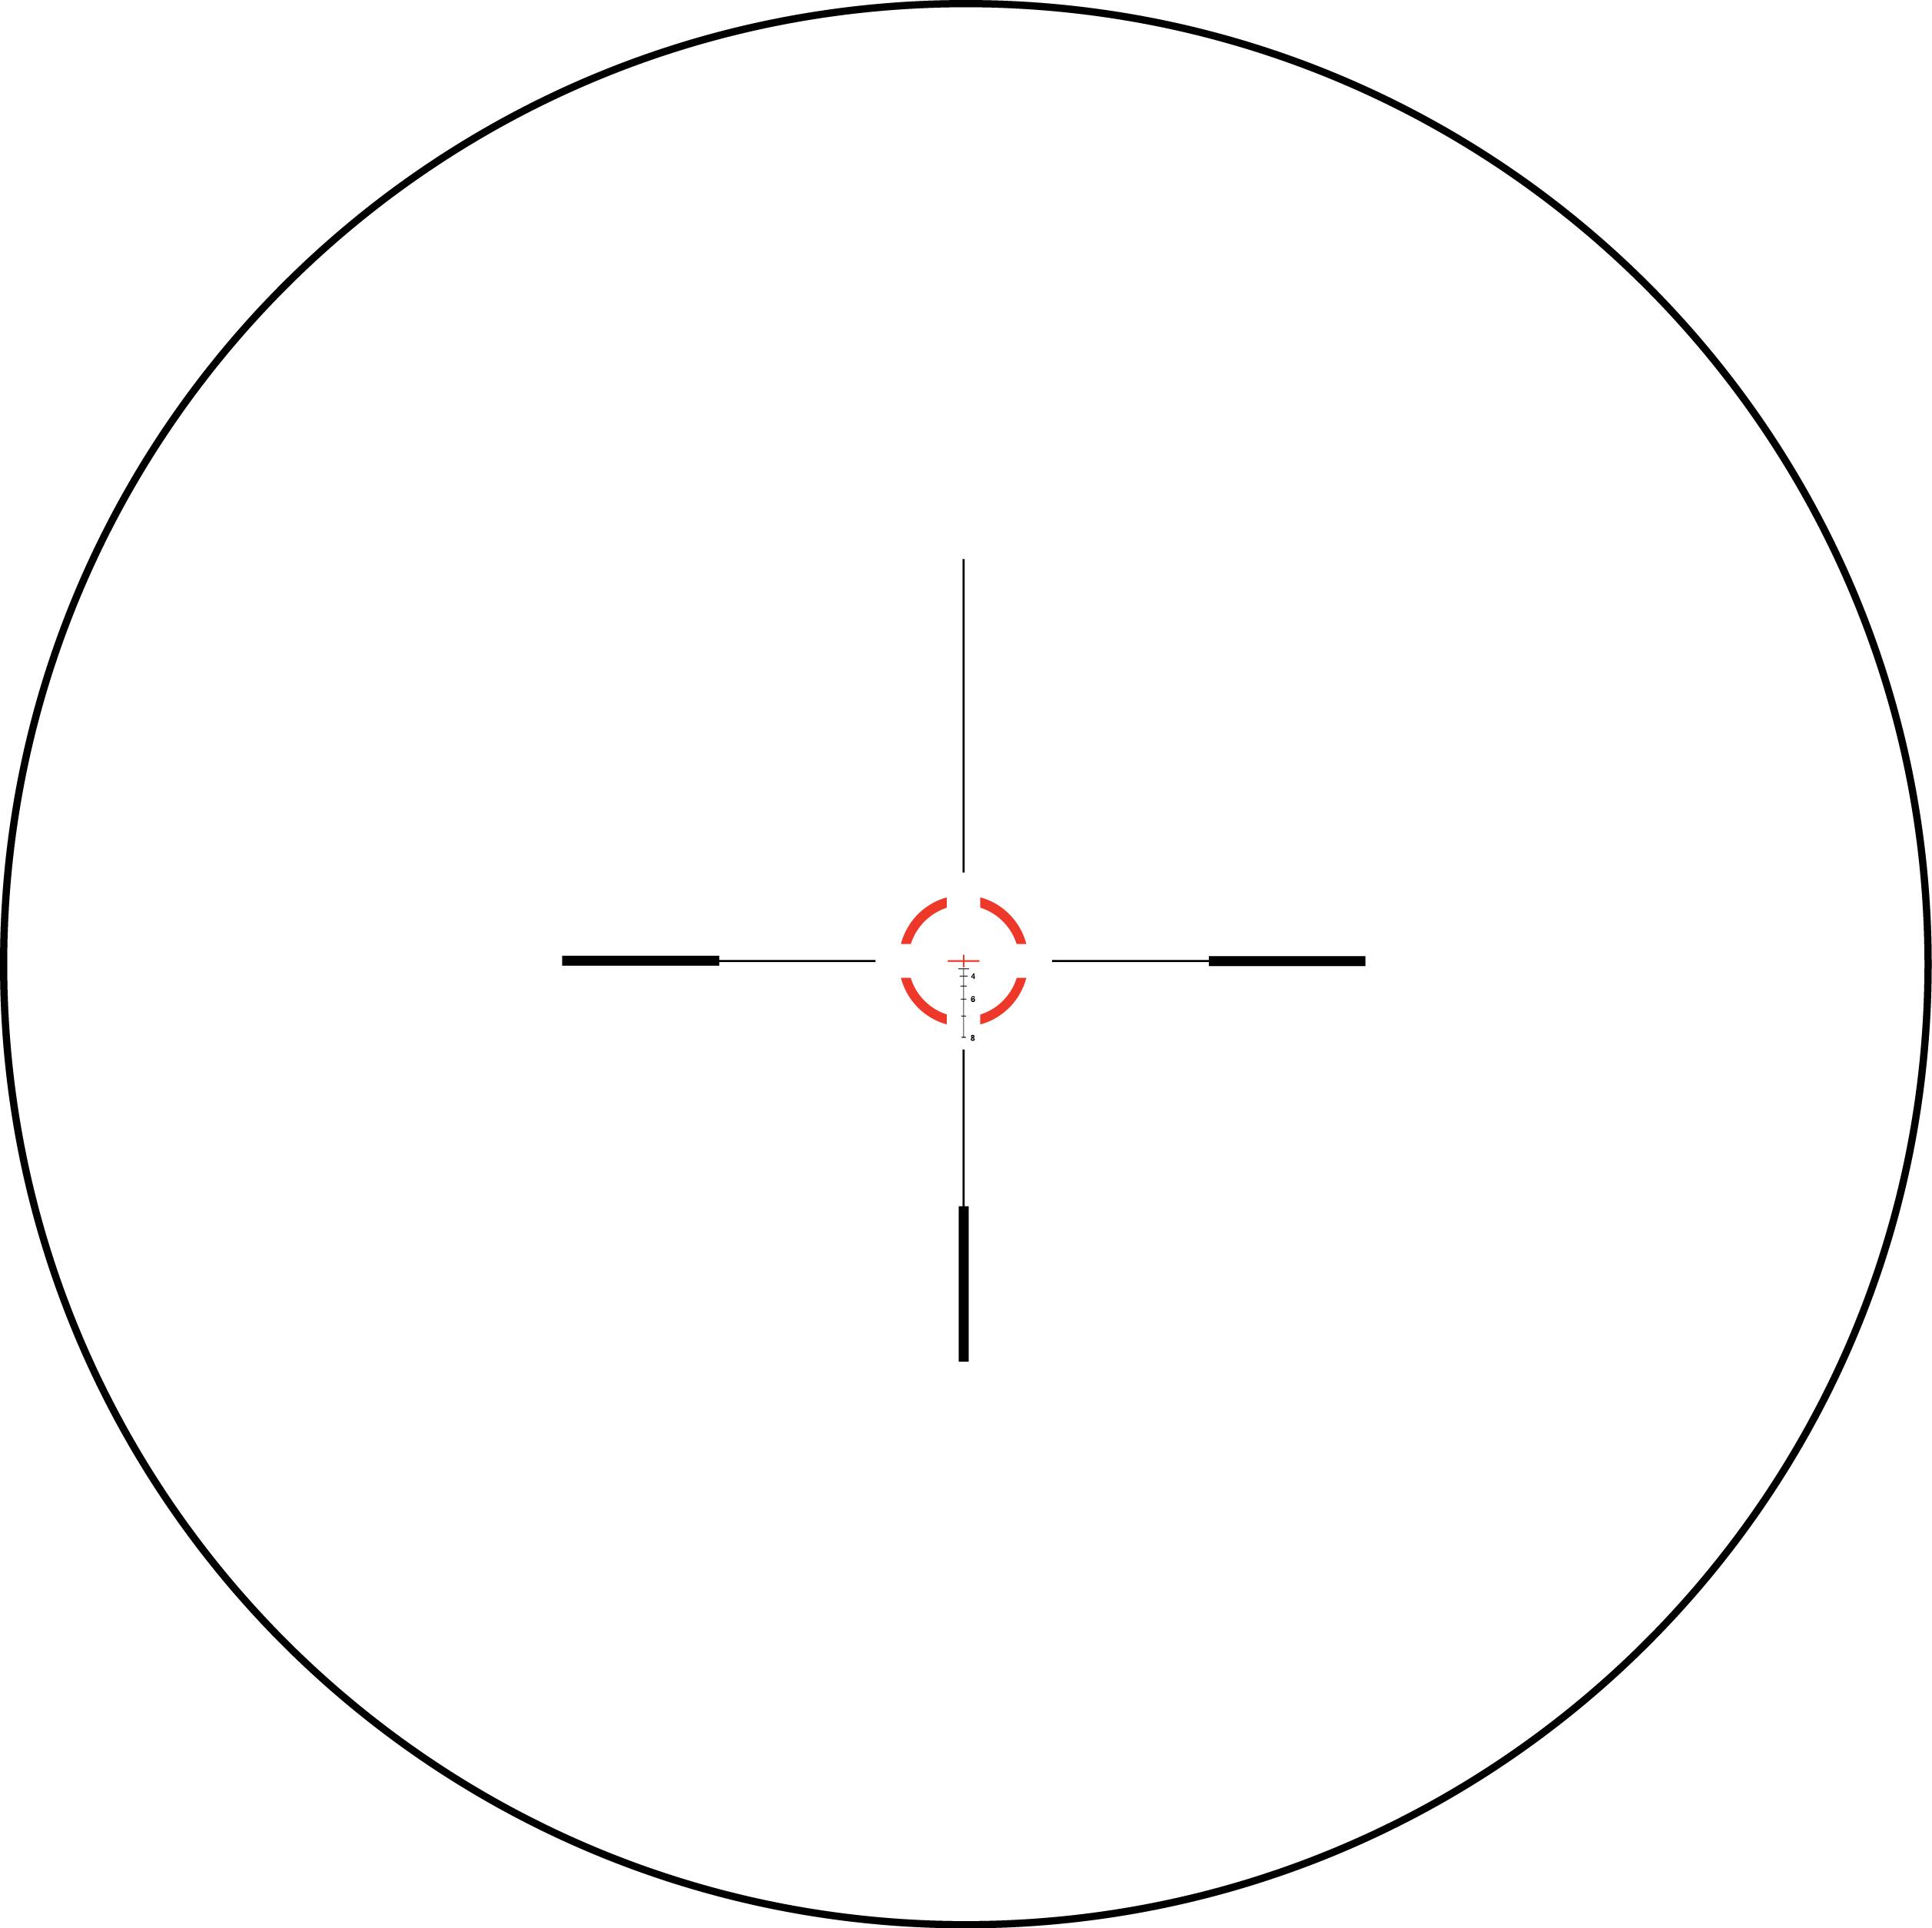 circle crosshair valorant